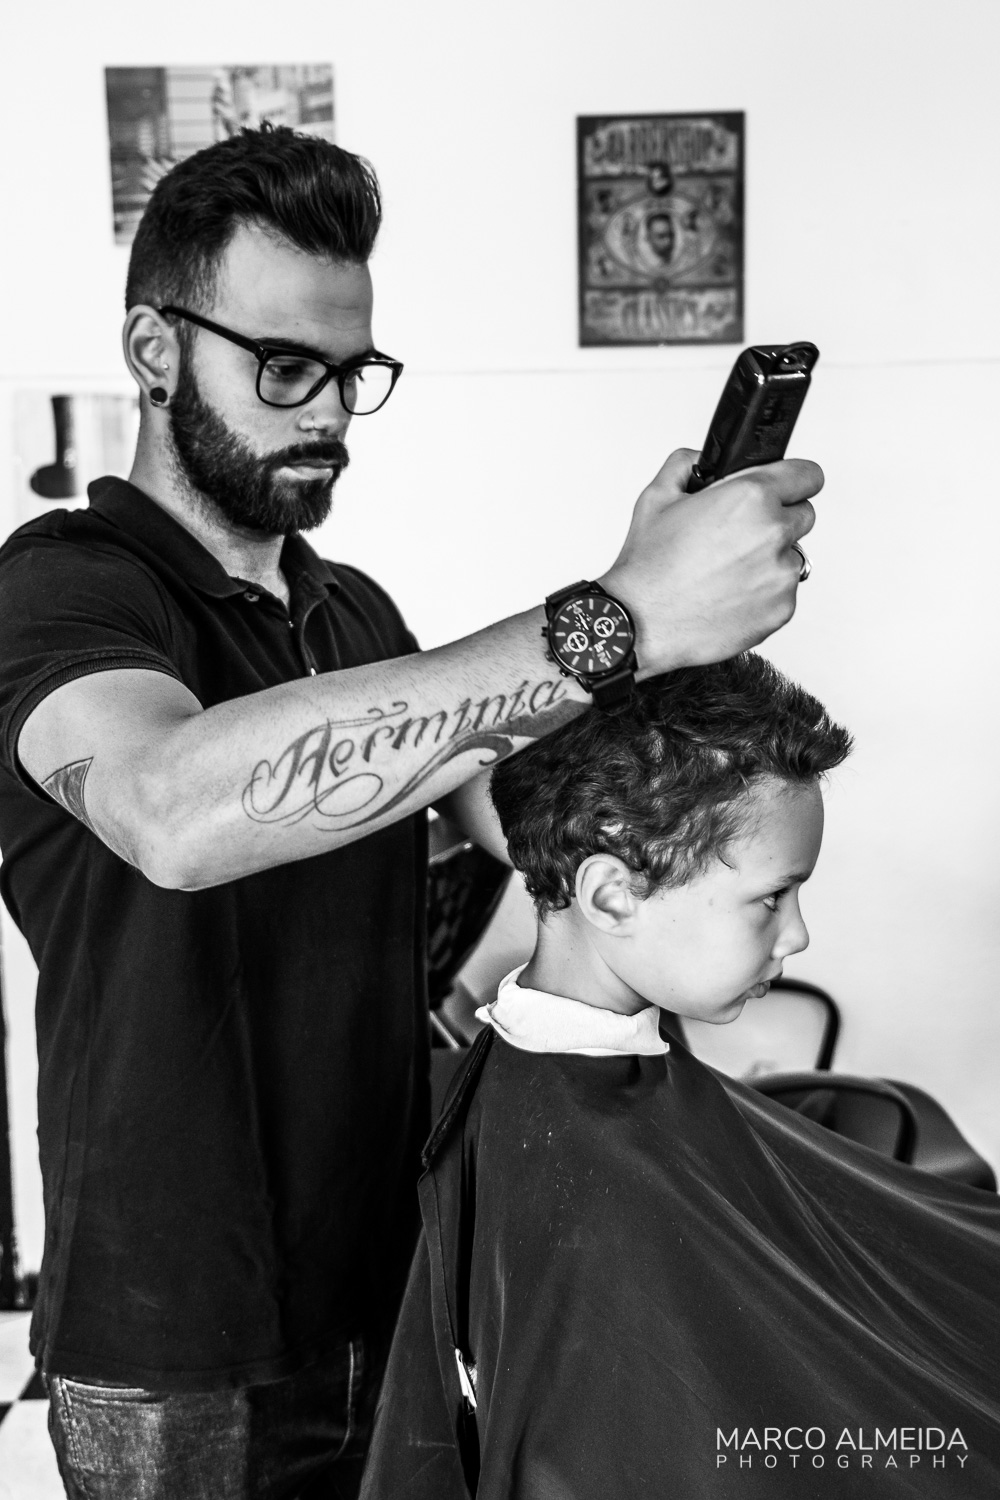 Luís at Barbershop O Pexito, Sesimbra - People - Marco Almeida Photography